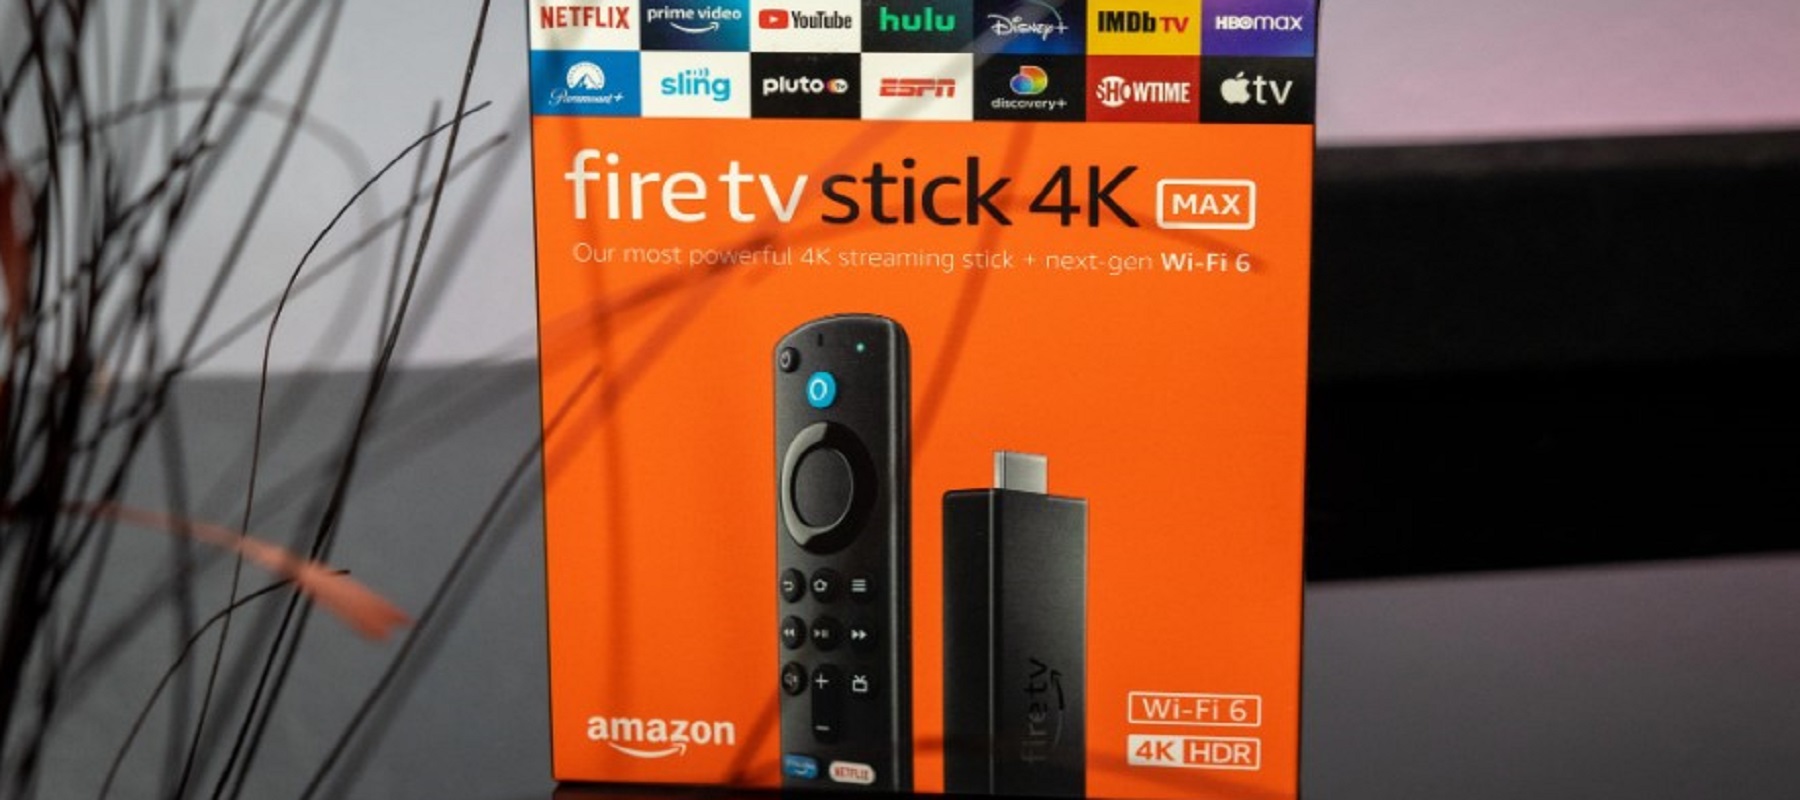 Amazon Fire TV surpasses 200 million devices sold globally